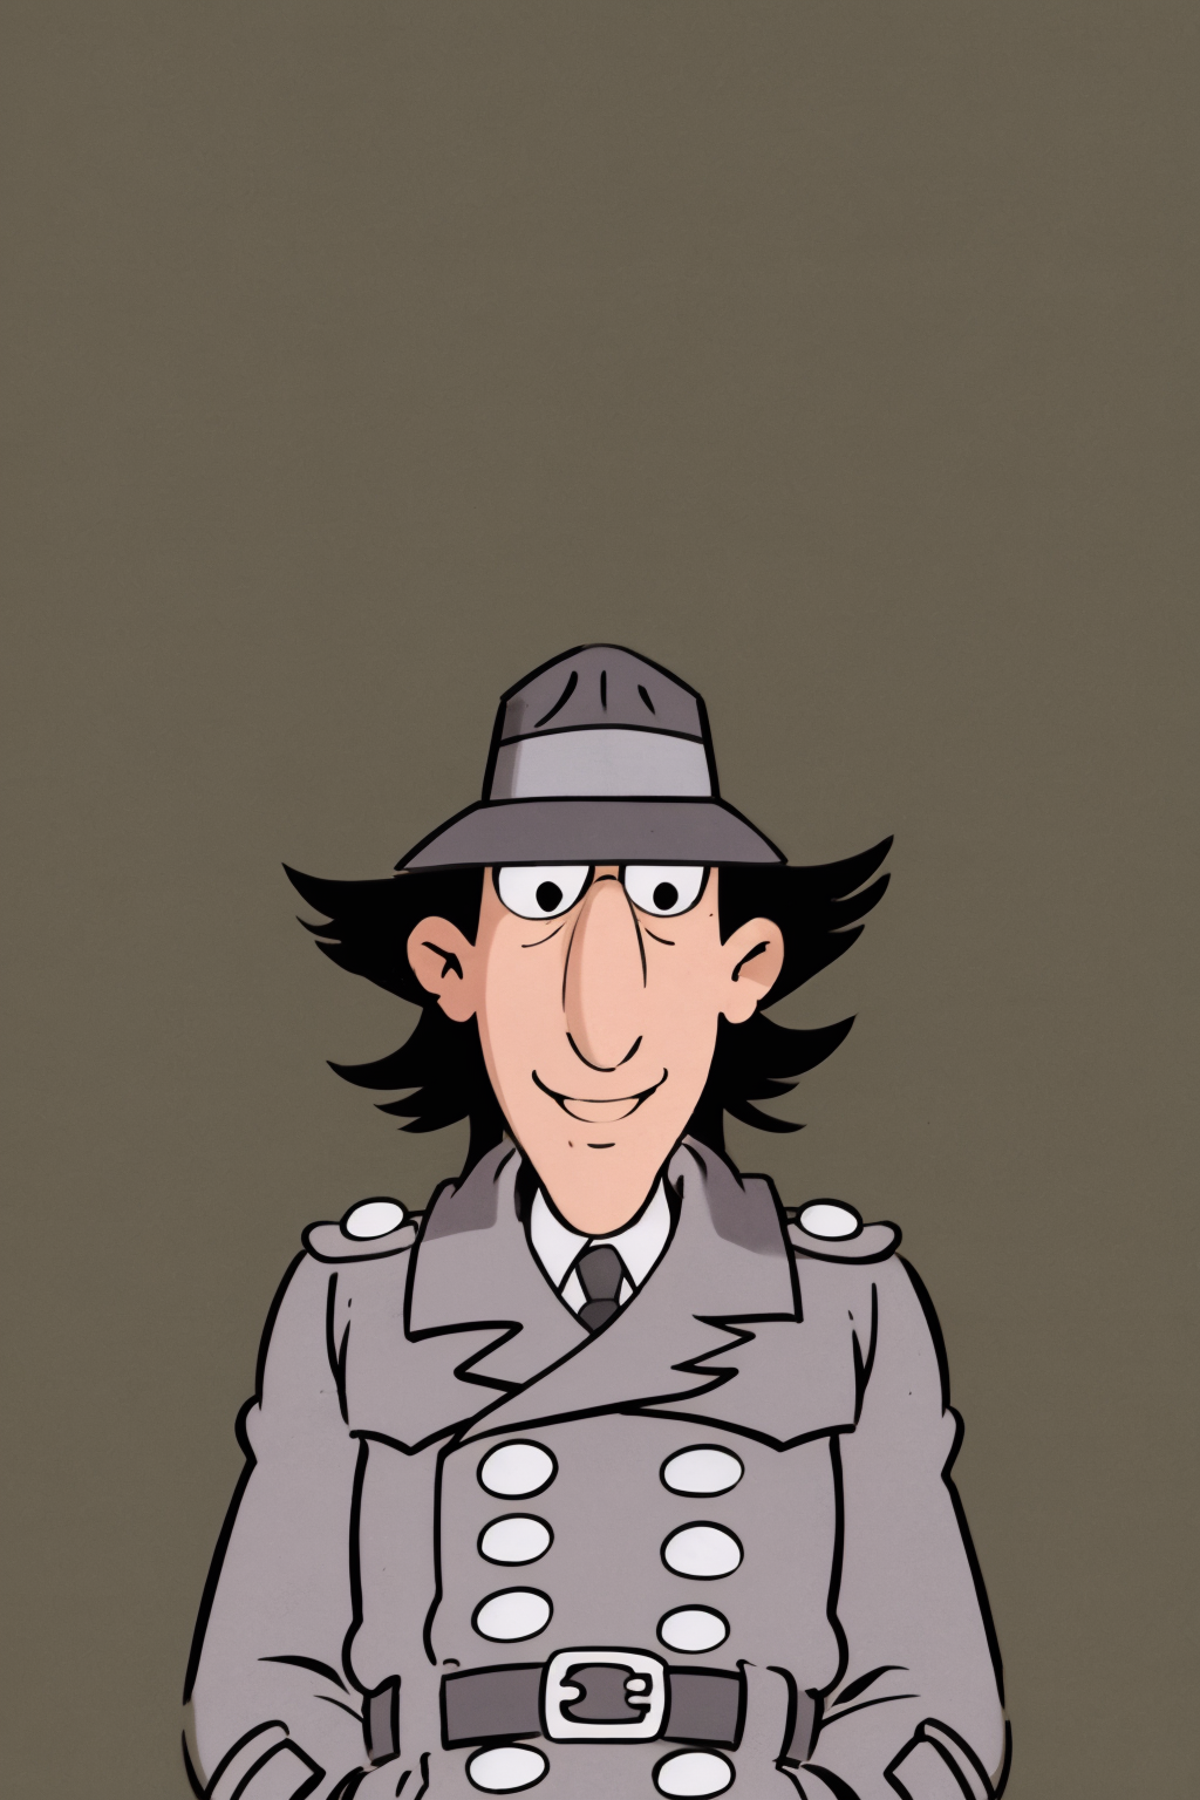 Inspector Gadget - 1983 TV series - Character LORA image by Konan